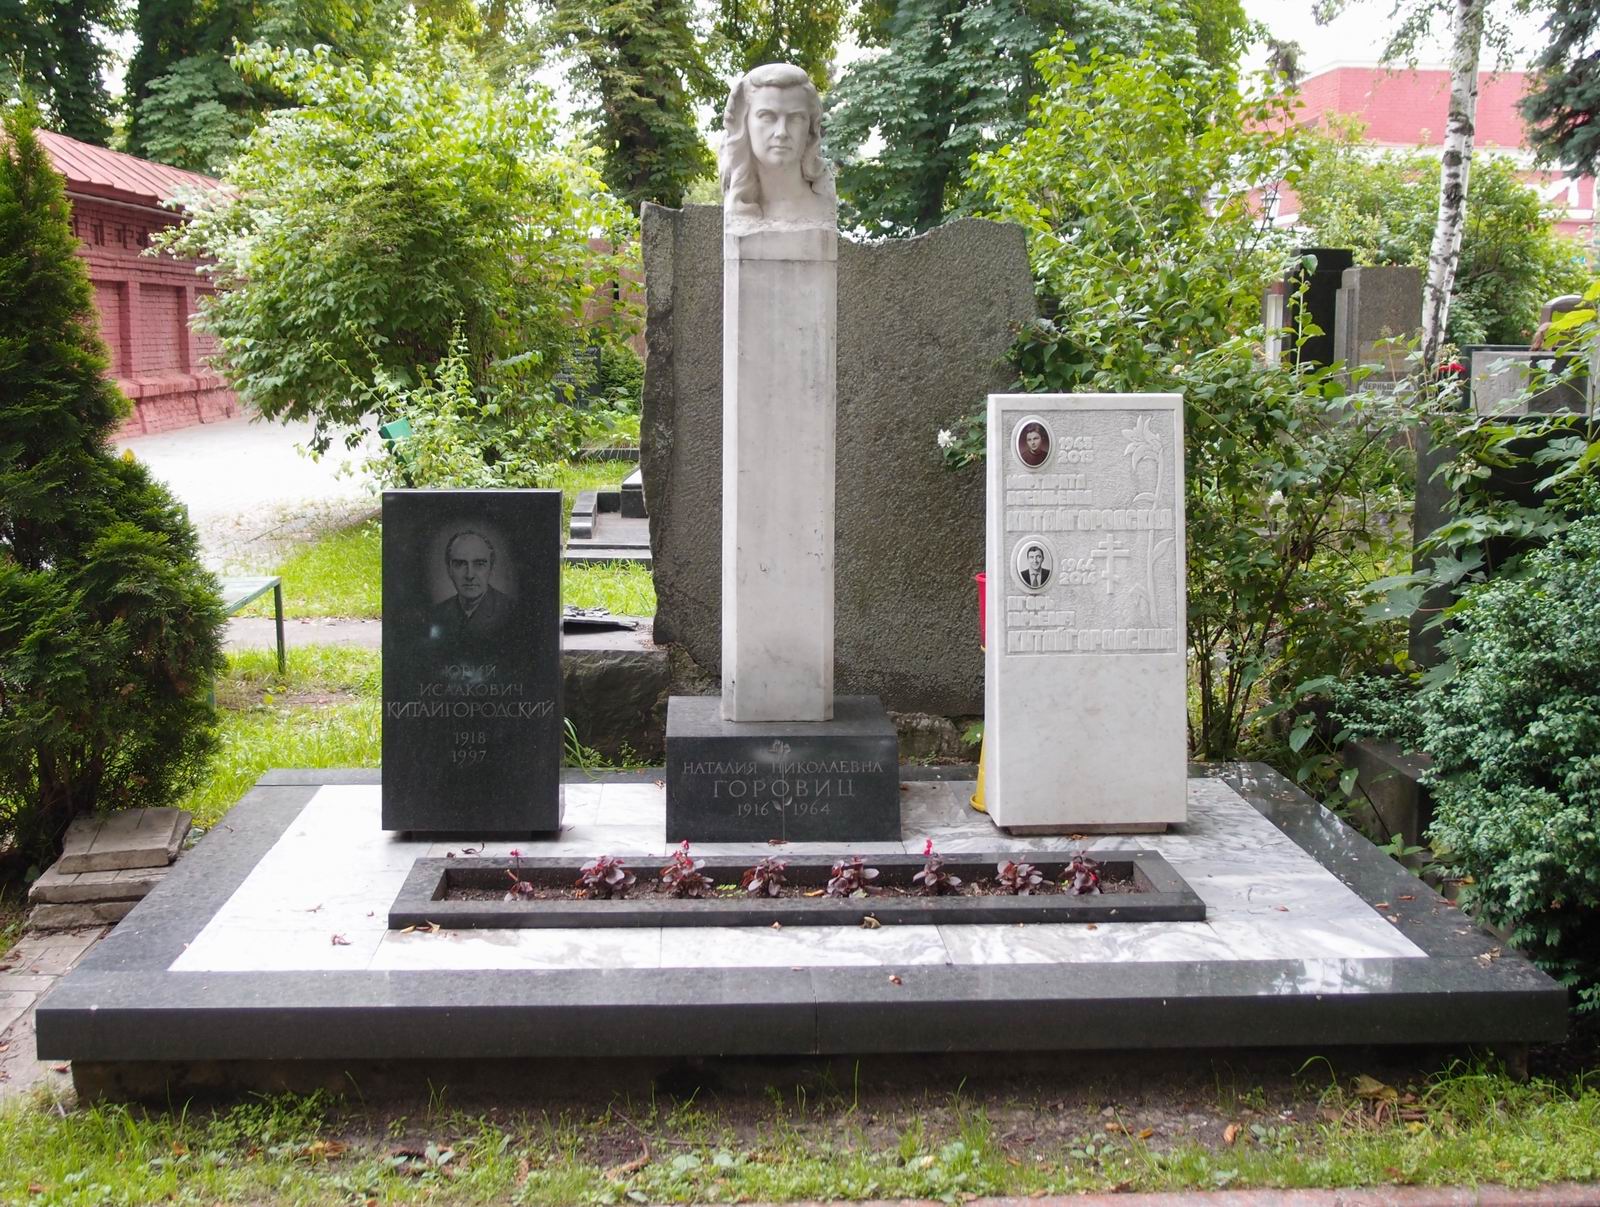 Памятник на могиле Горовиц-Китайгородской Н.Н. (1916–1964), ск. Е.Янсон-Манизер, арх. П.Скокан, на Новодевичьем кладбище (5–8–1).